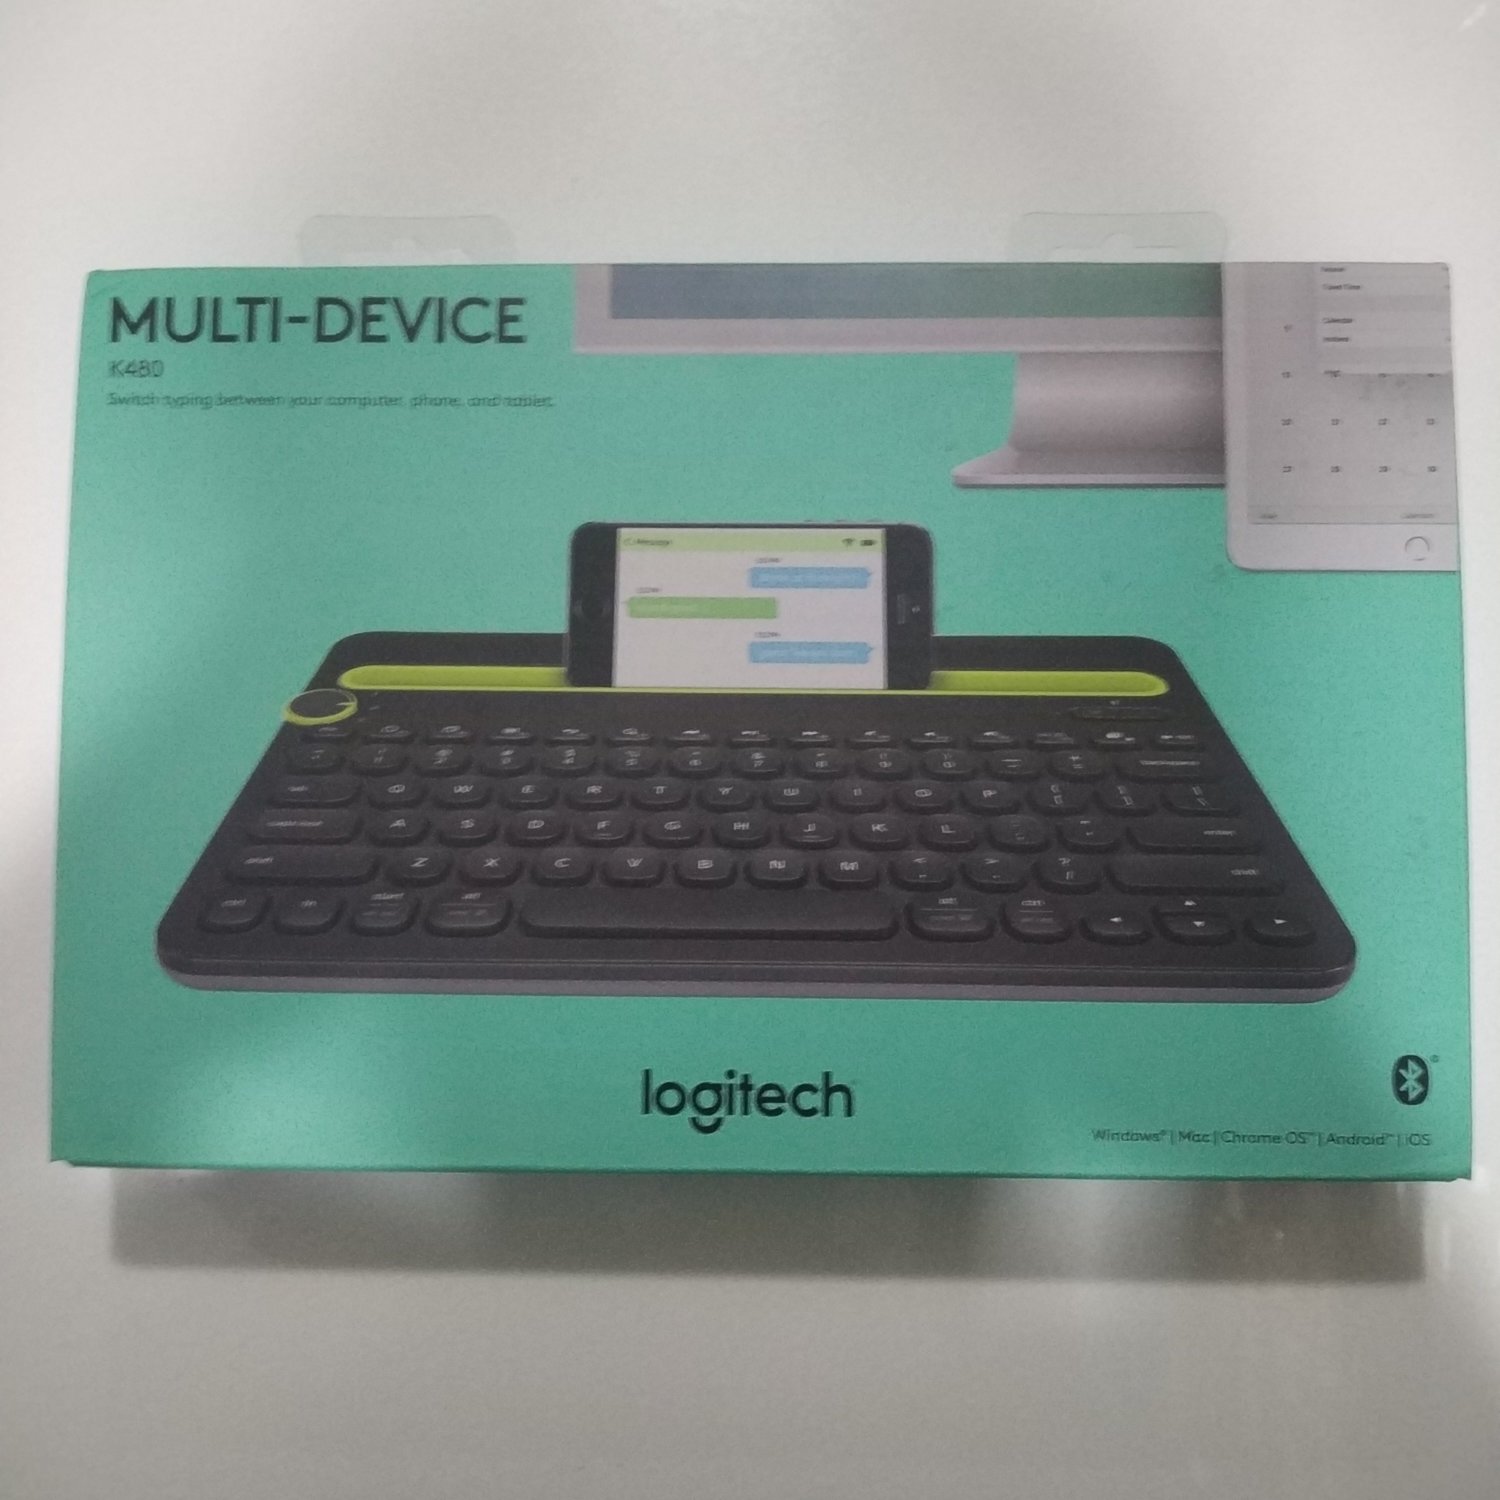 Logitech K480 Pc & mobile Bluetooth Keyboard ,Black